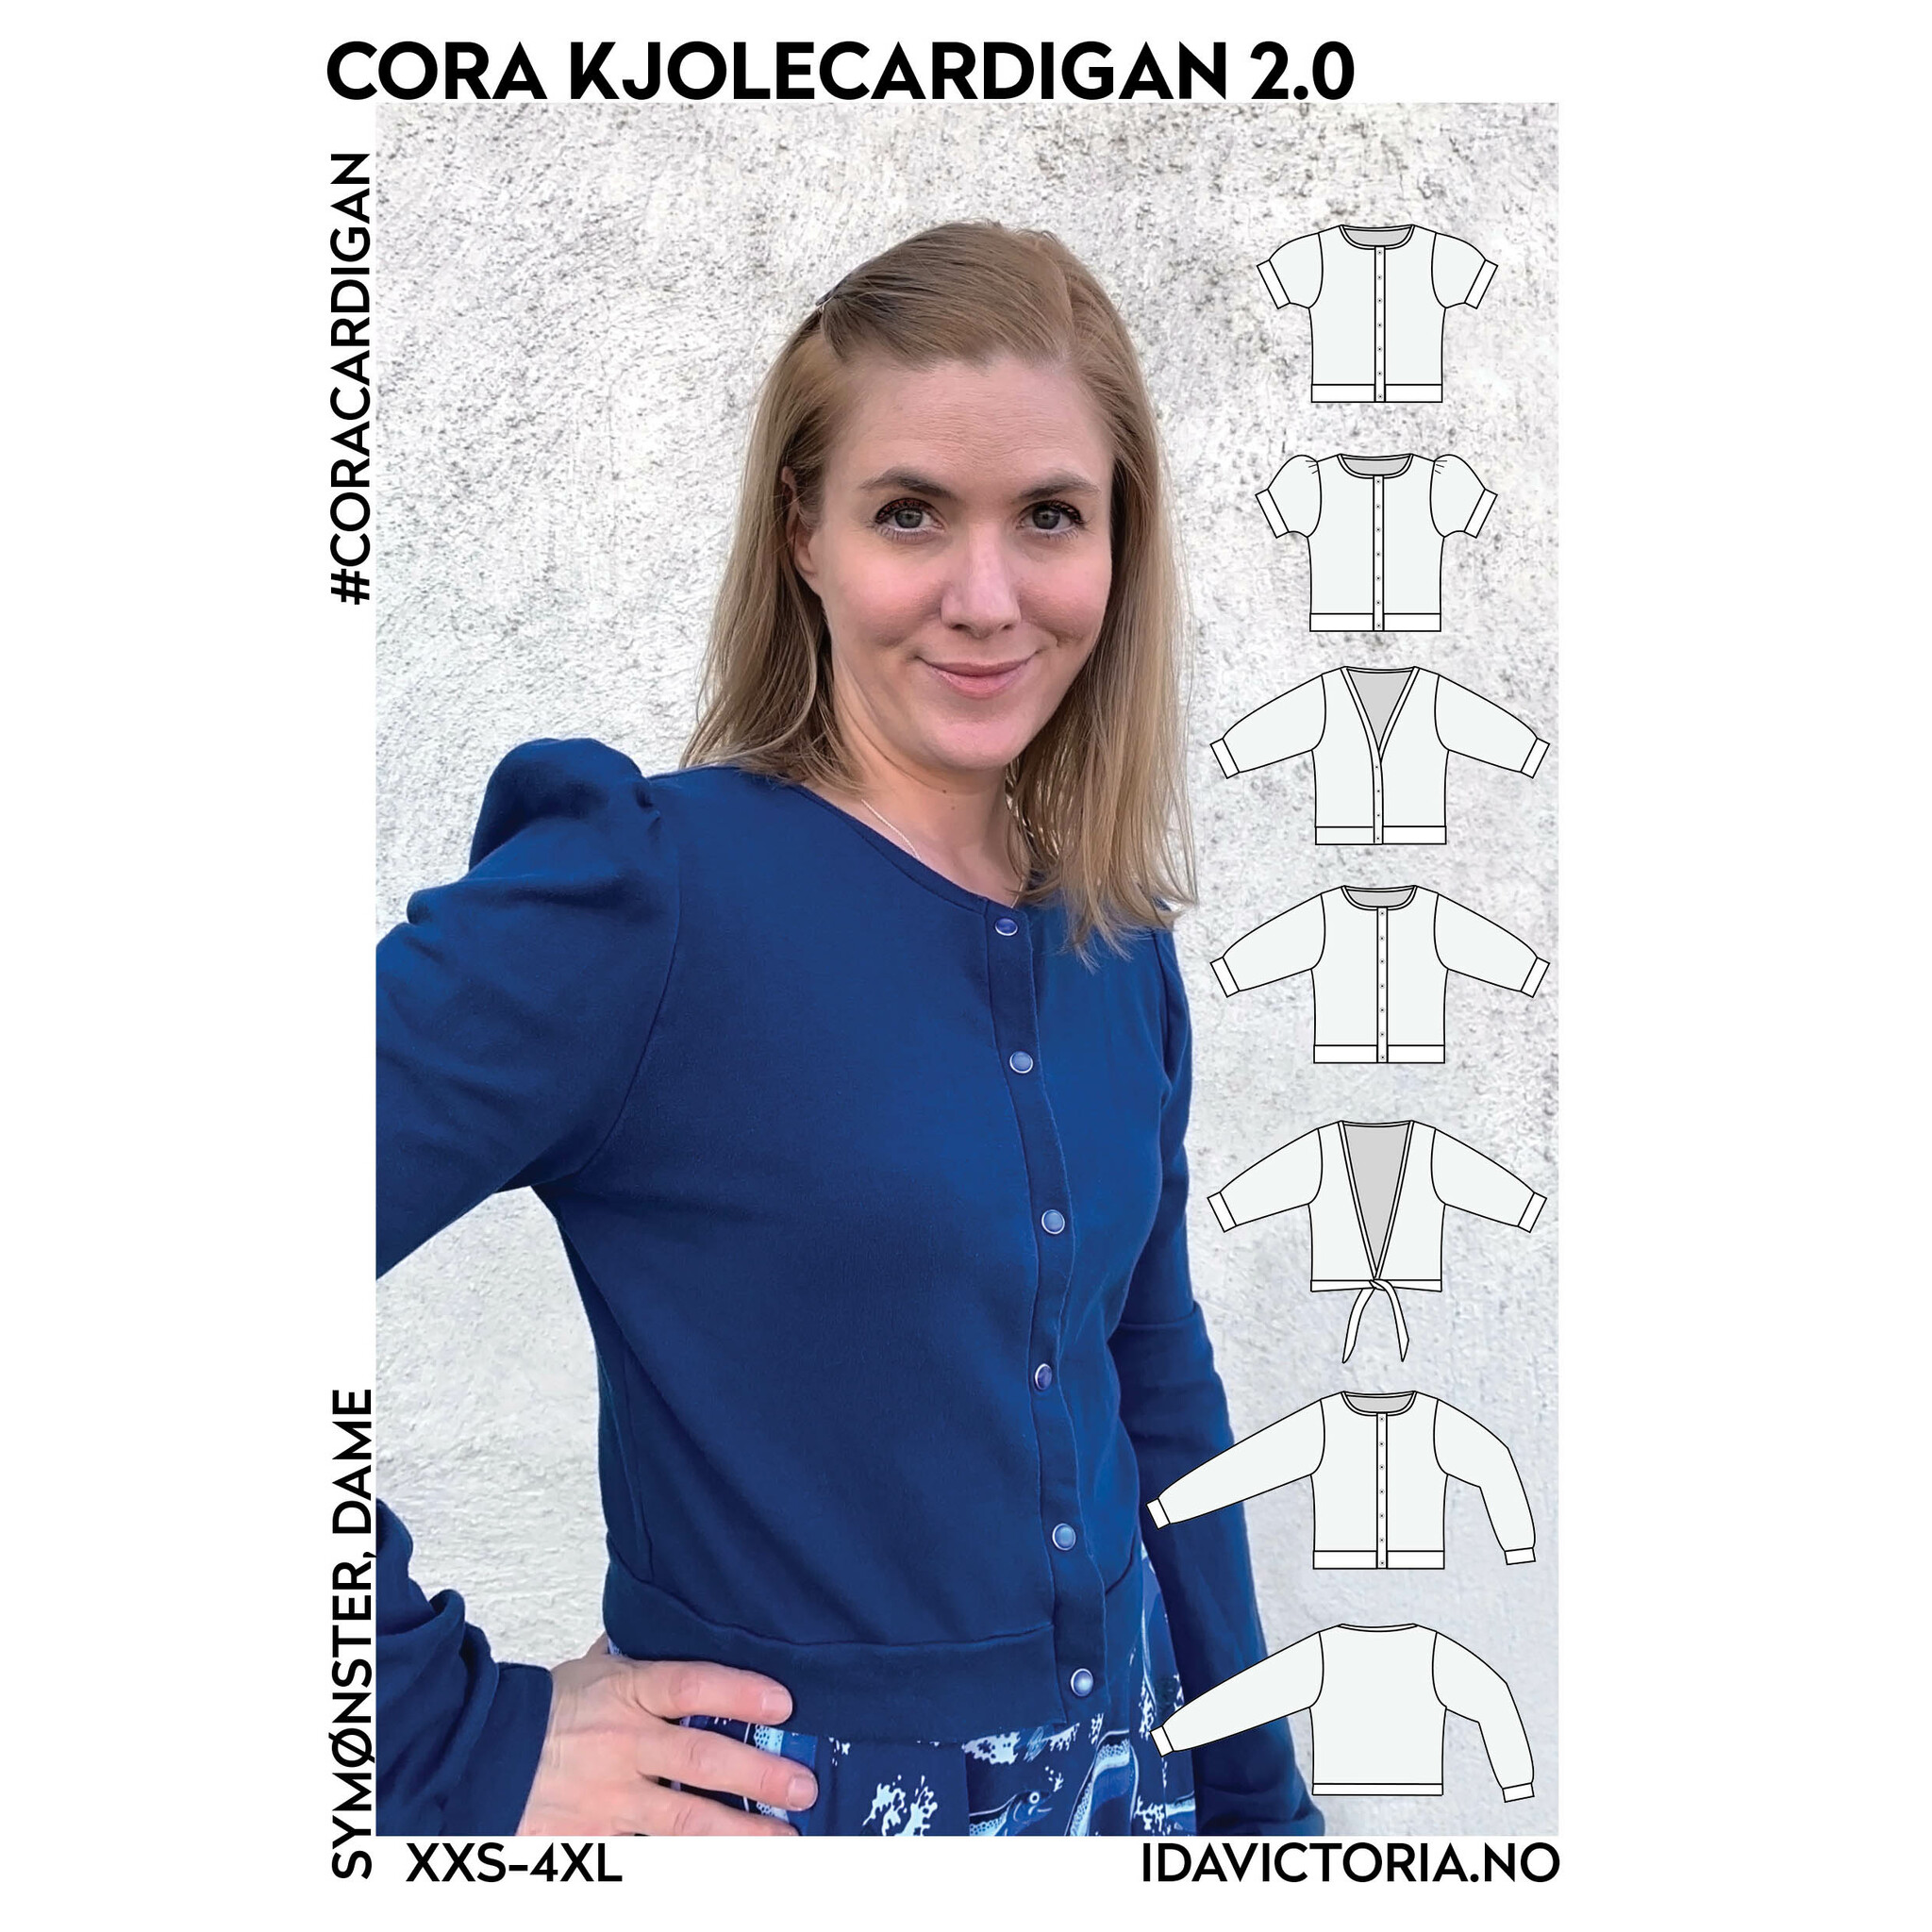 Cora kjolecardigan